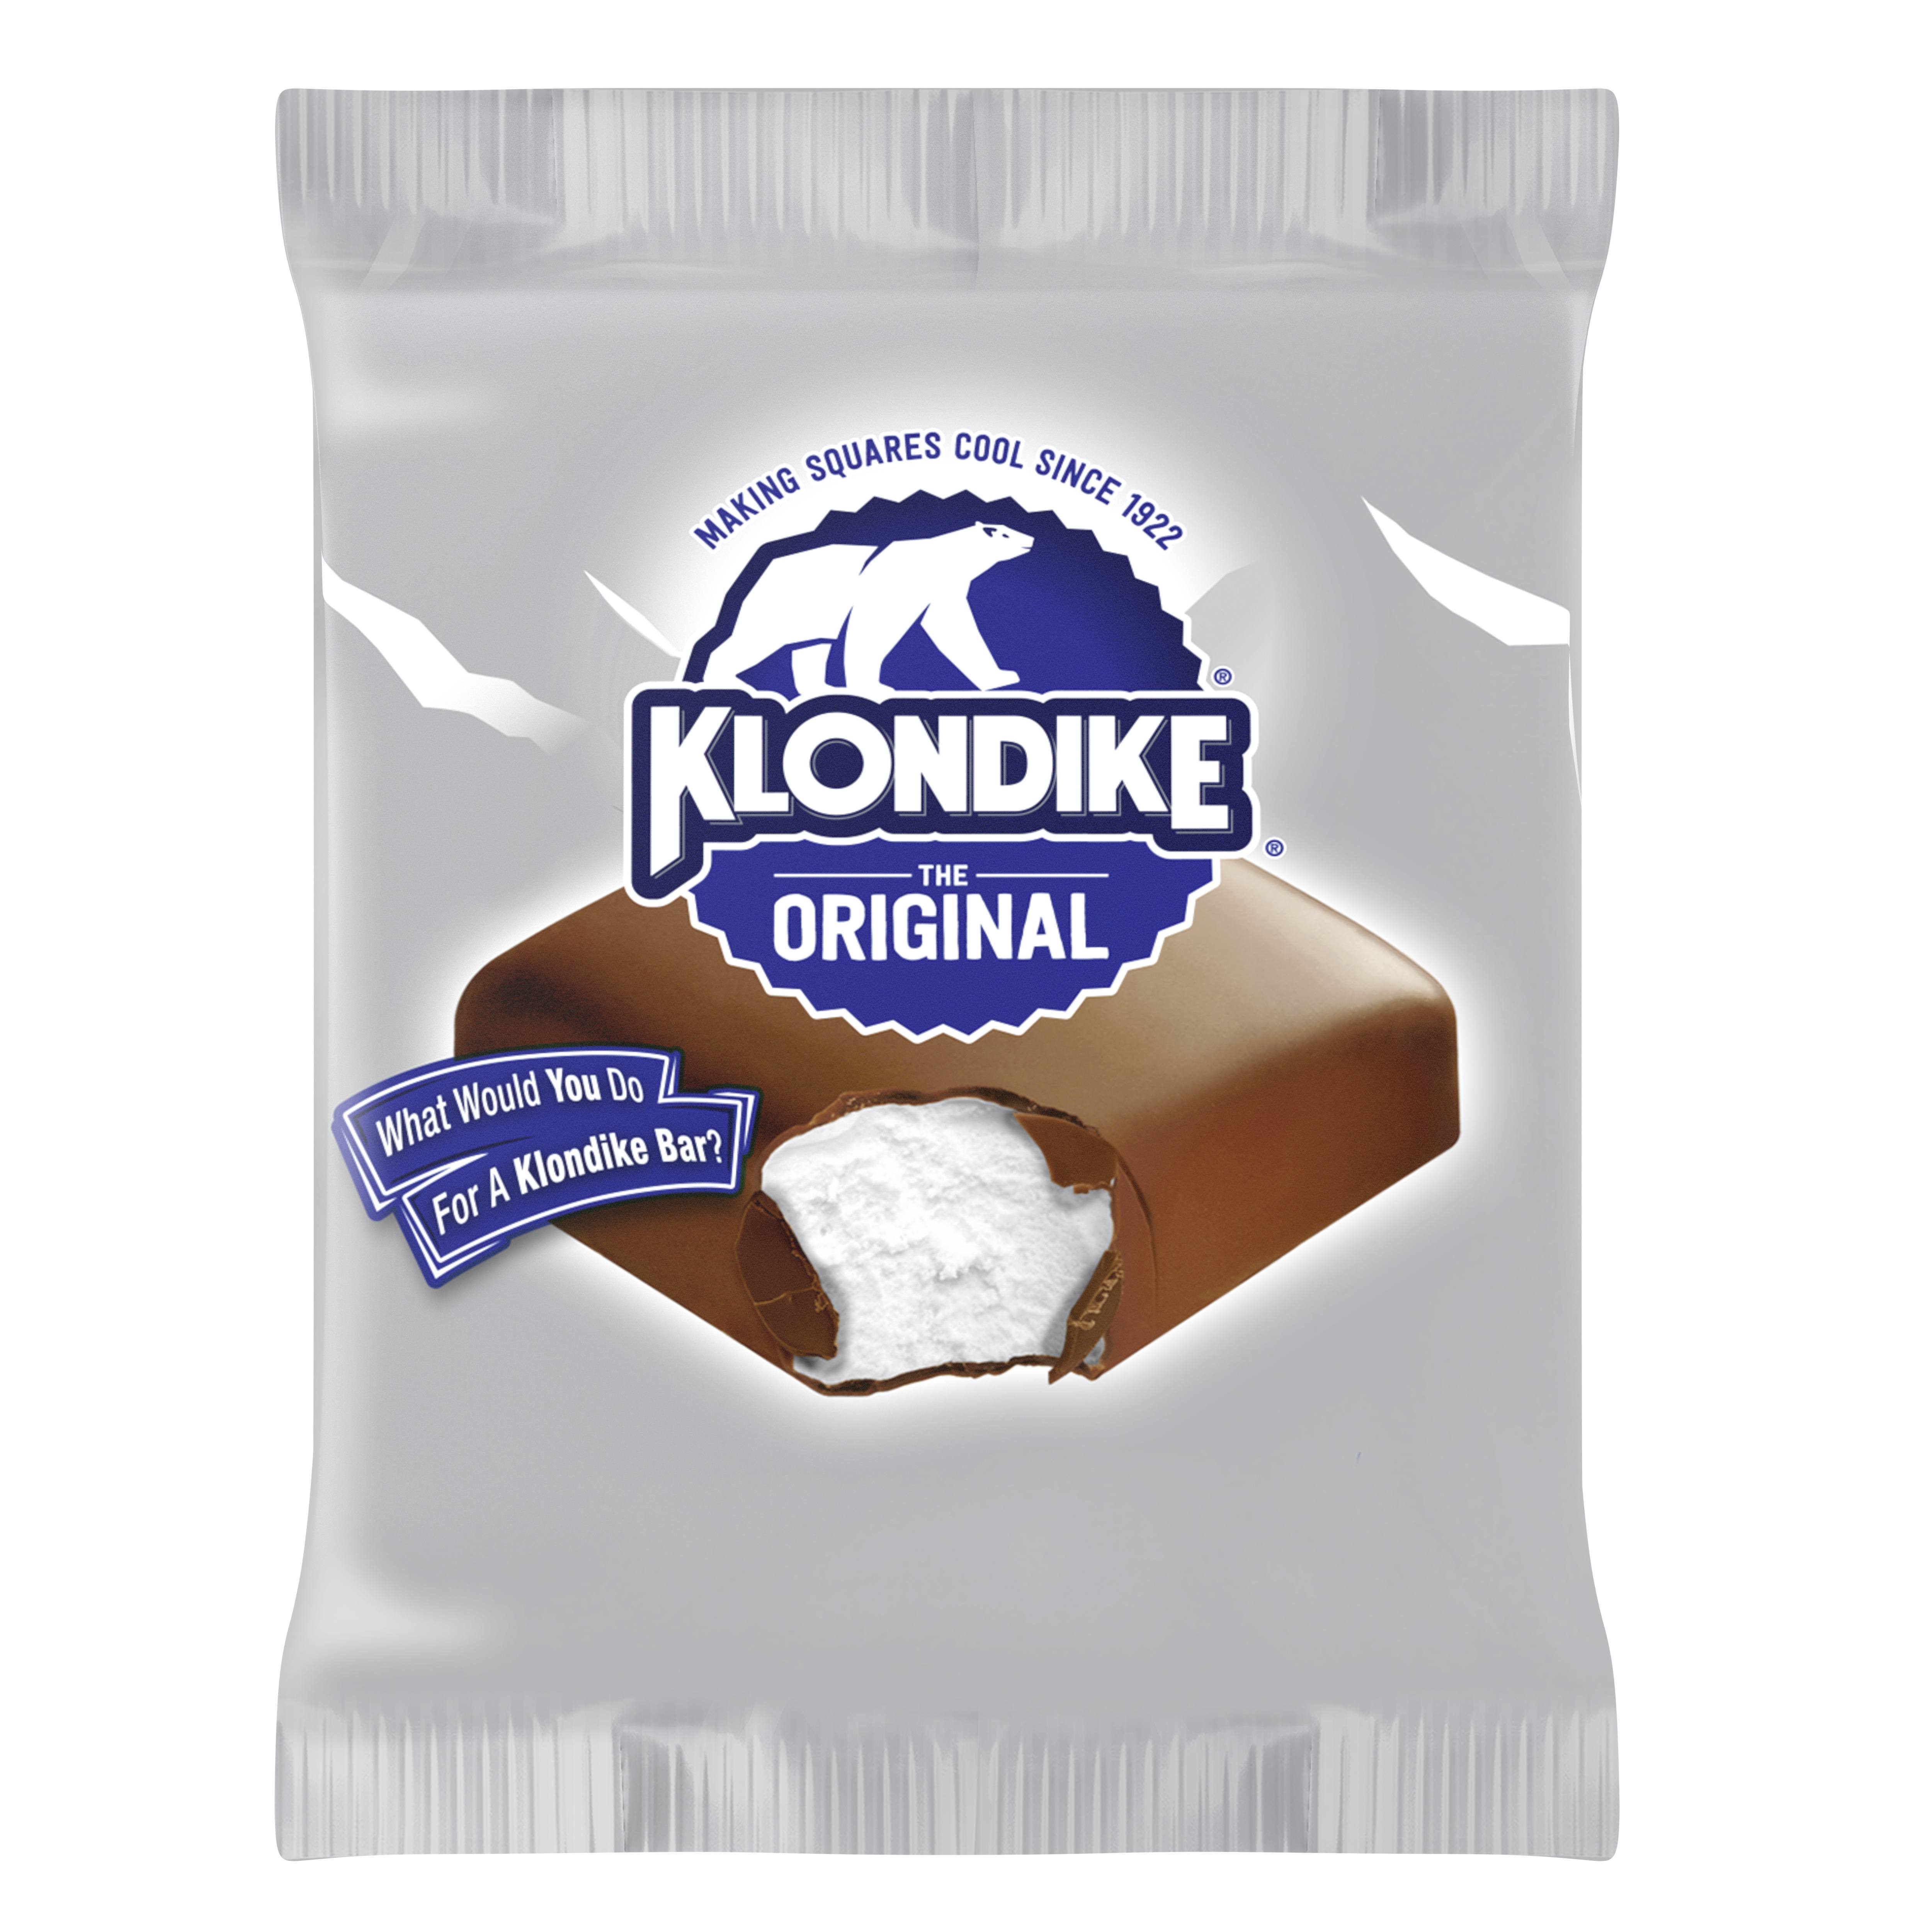 Klondike Ice Cream Bars, The Original - 5.5 fl oz